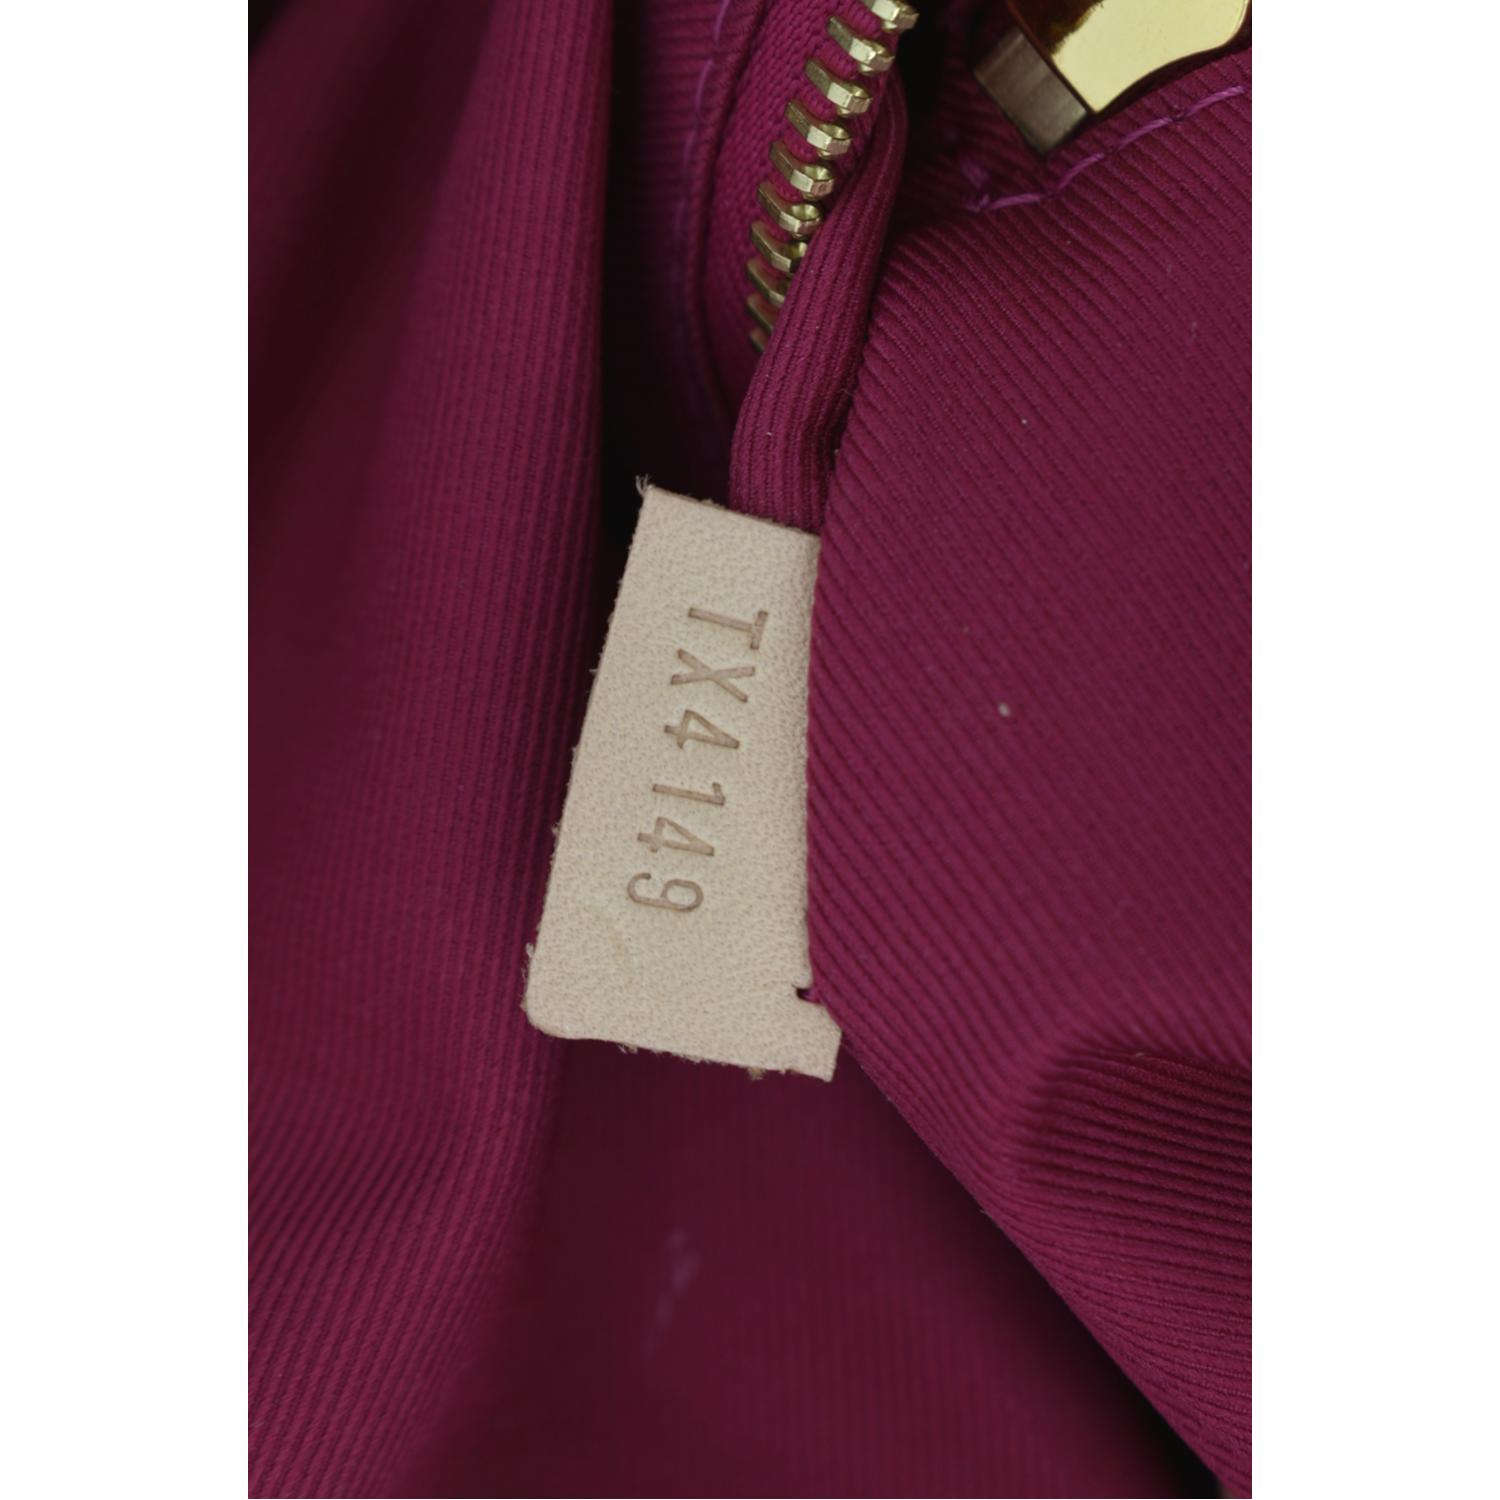 Louis Vuitton Randonnee PM - $750 (71% Off Retail) - From Fancy